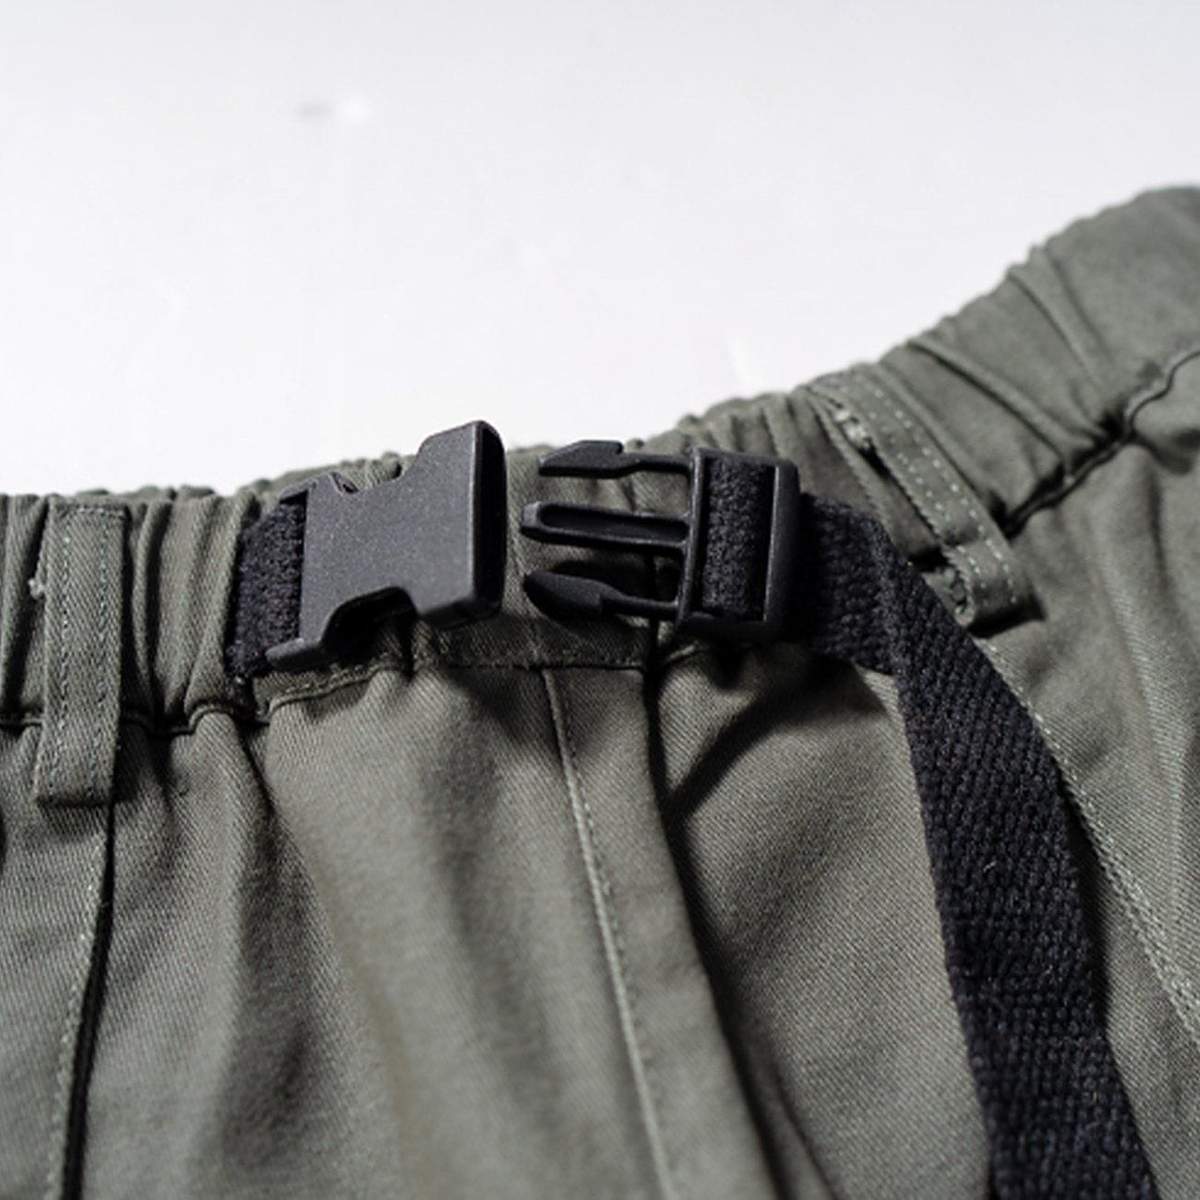 Solid Color Multi-Pocket Cargo Shorts